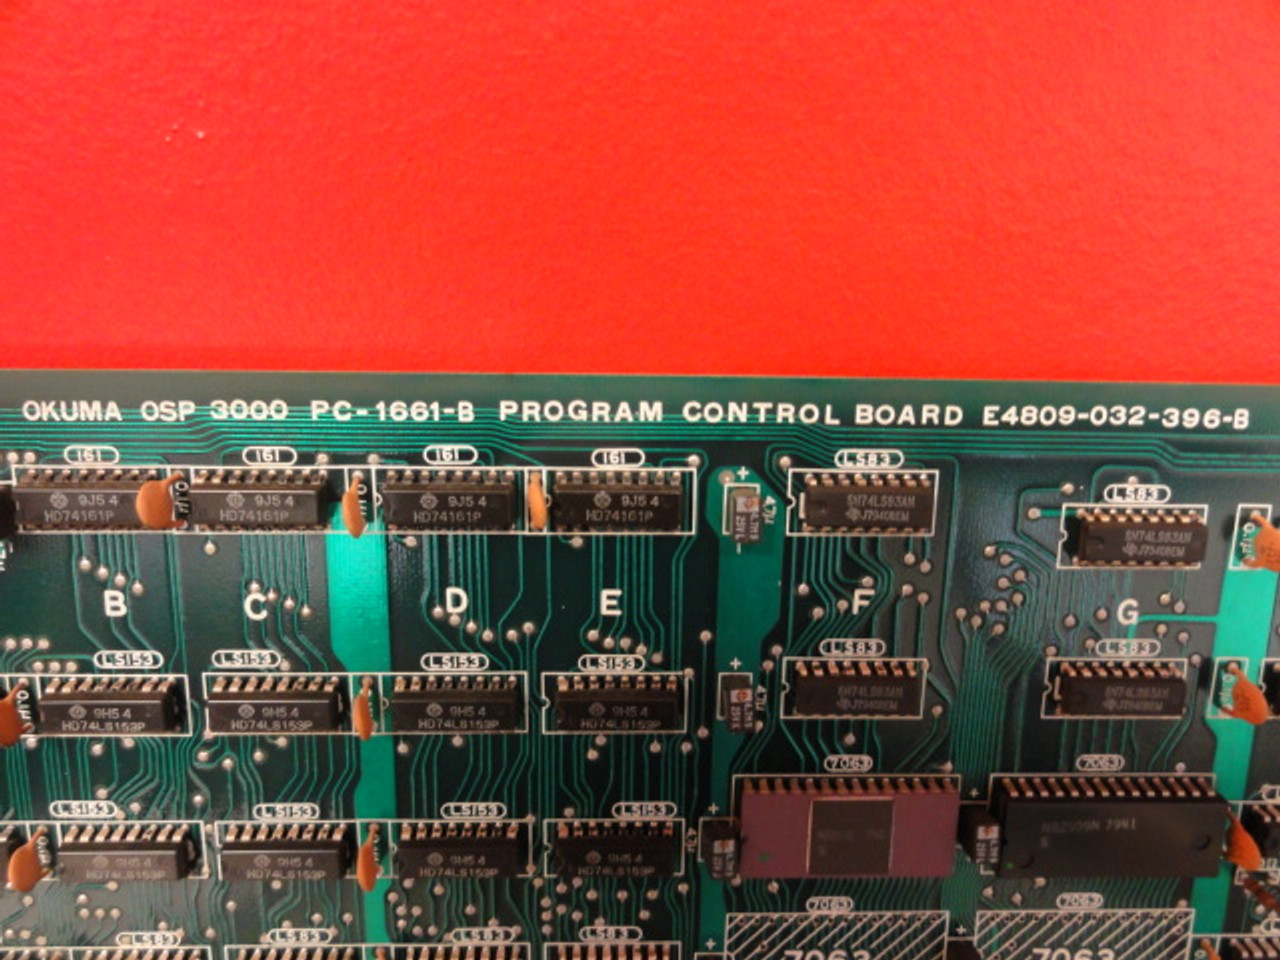 Okuma OSP 3000 PC-1661-B Program Control Board E4809-032-376-B